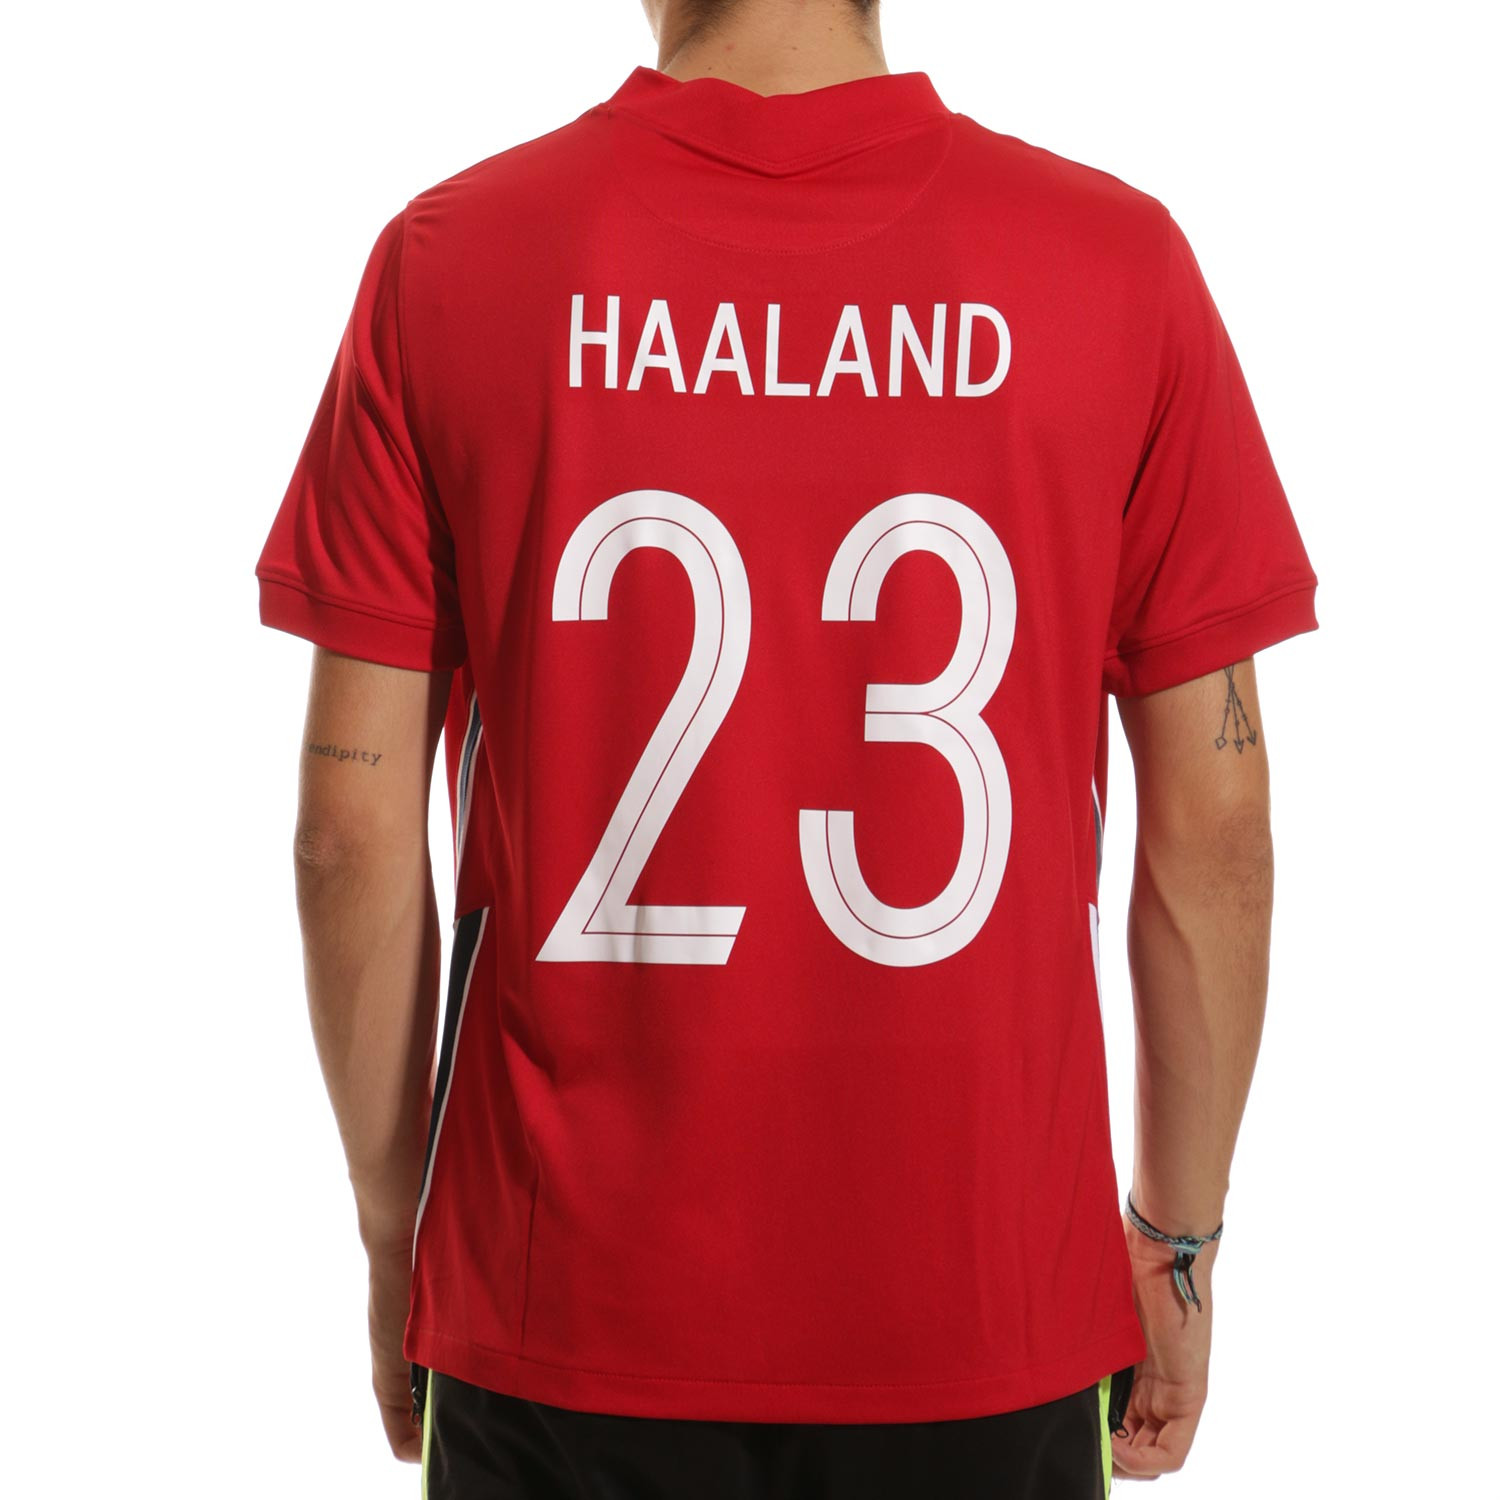 Camiseta Nike Noruega Haaland 2020 2021 Stadium roja